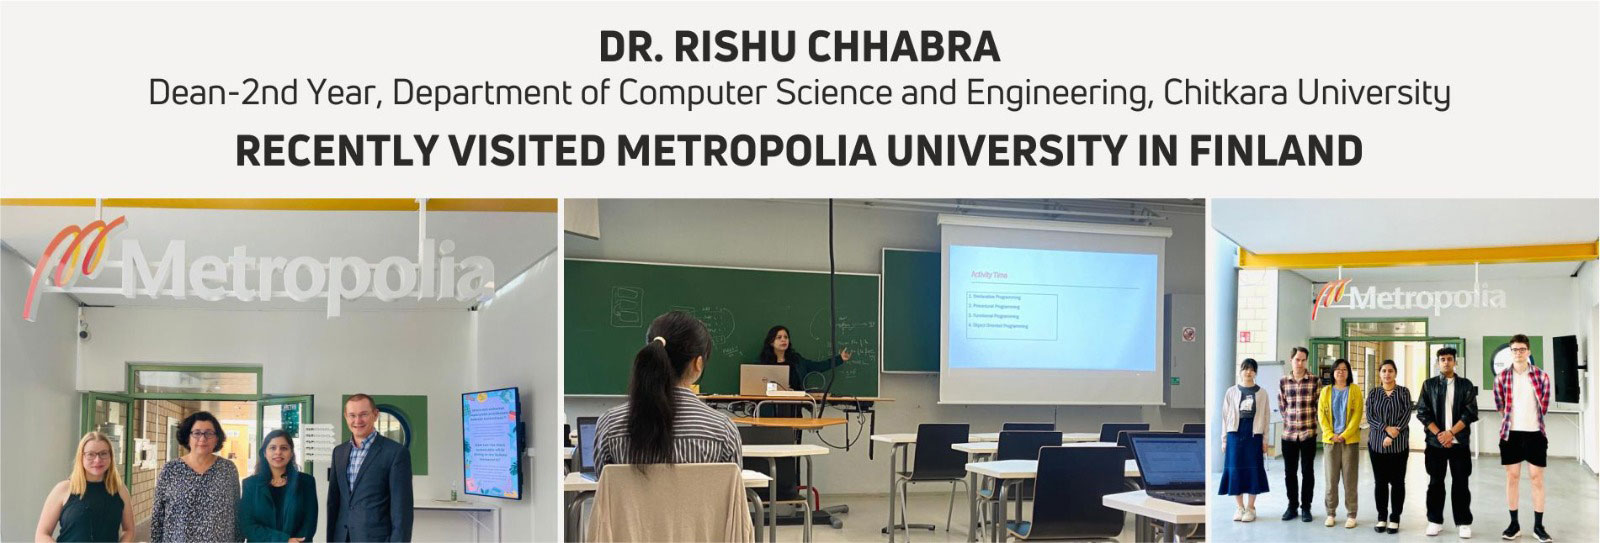 Dr. Rishu Chhabra at Metropolia ICT